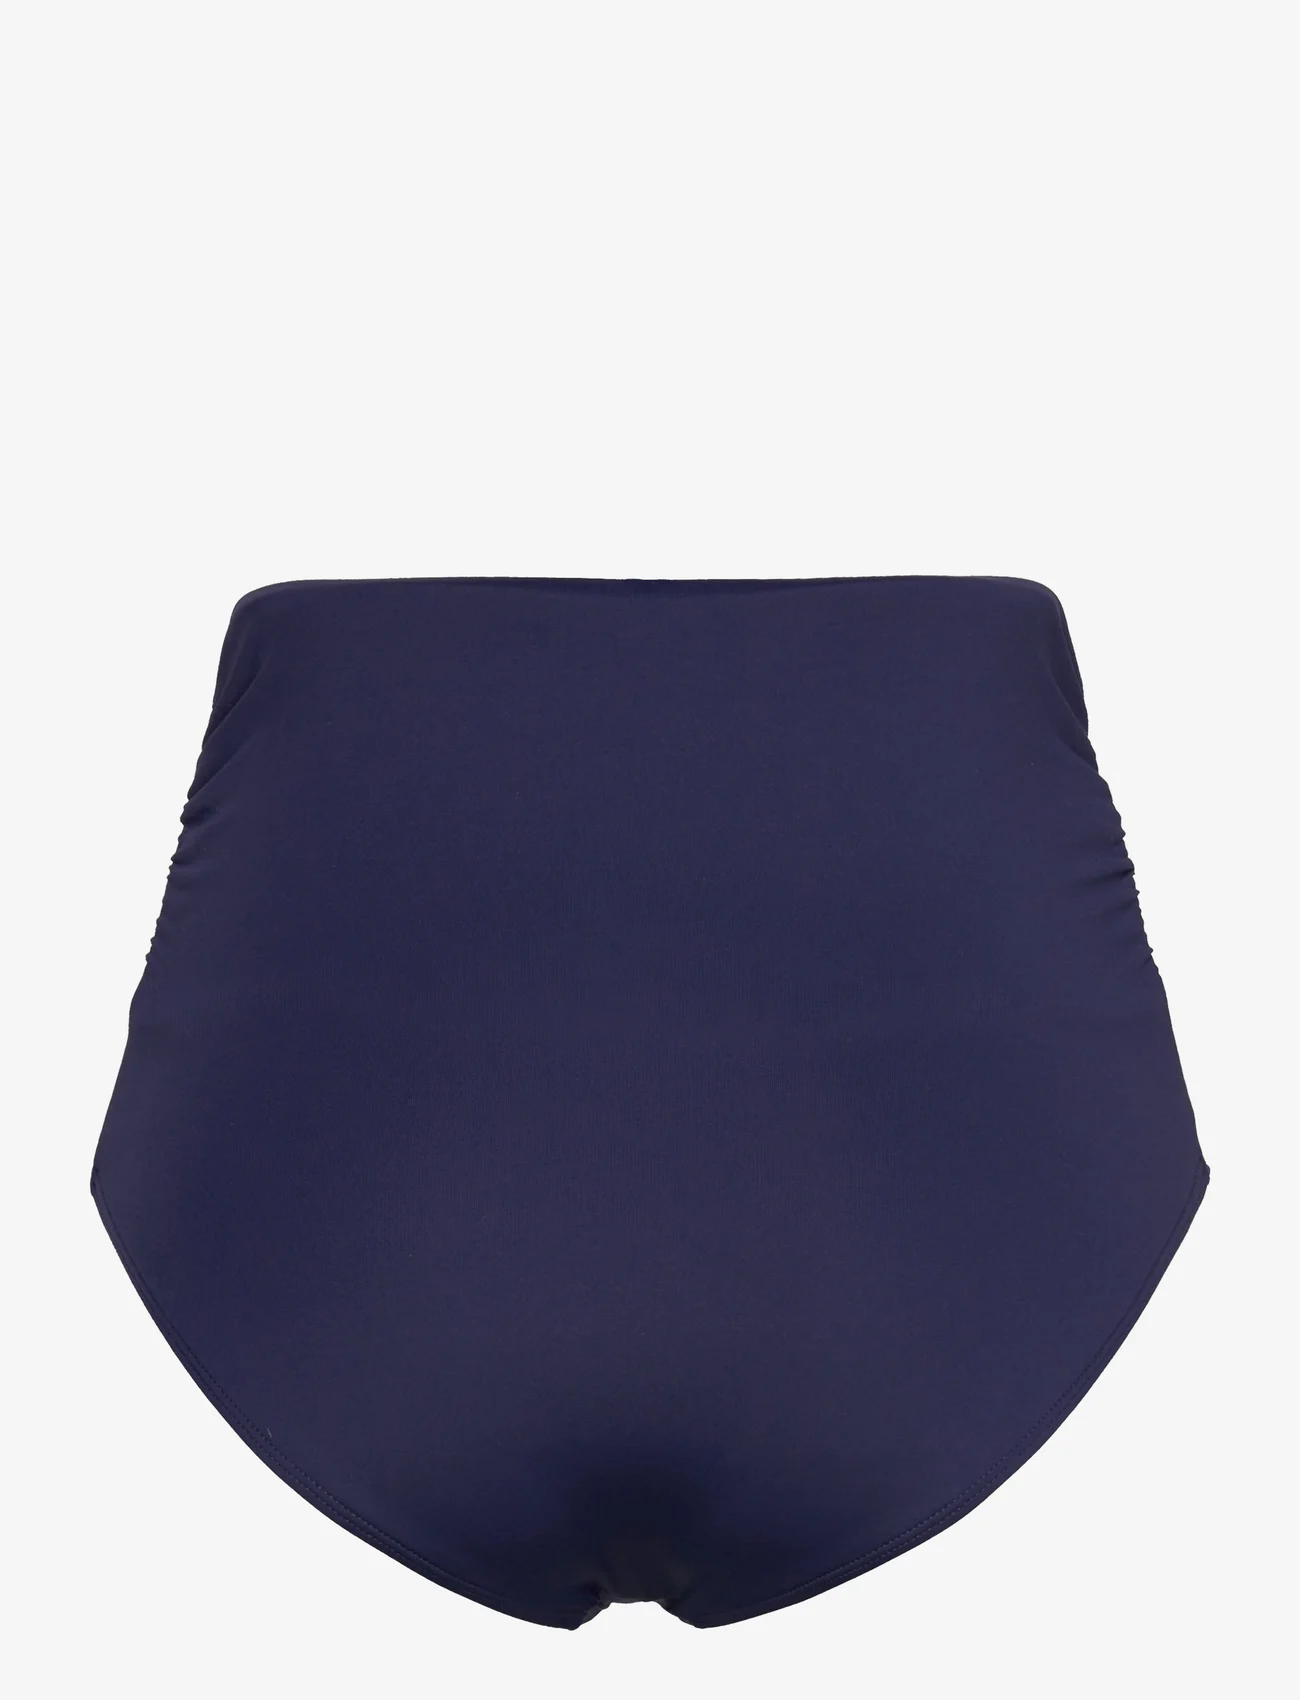 Panos Emporio - Chara Solid Bottom - high waist bikini bottoms - navy - 1